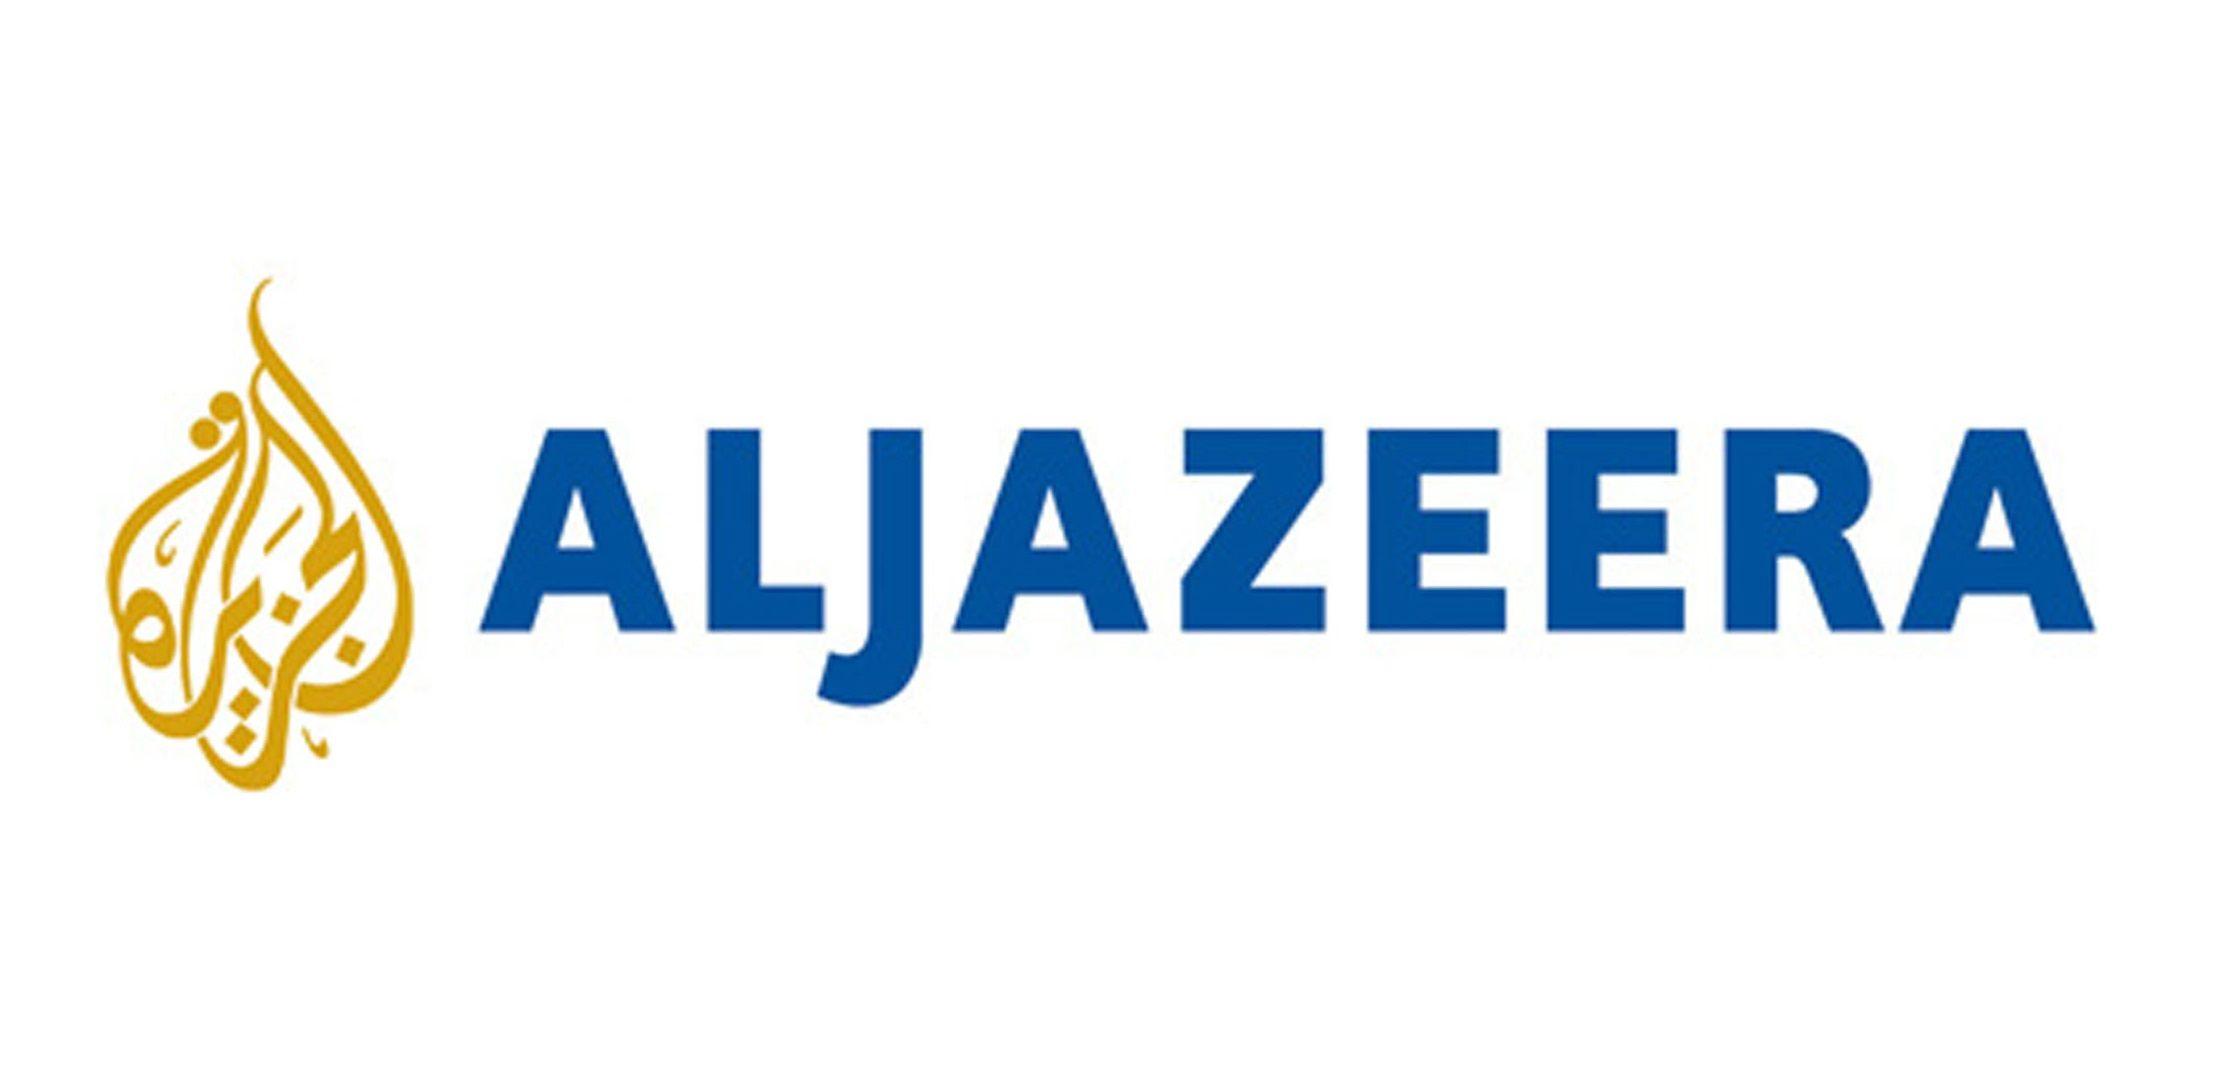 Atthe End with a Blue B Logo - Qatar: Saudi led coalition lists the closure of Al Jazeera among ...